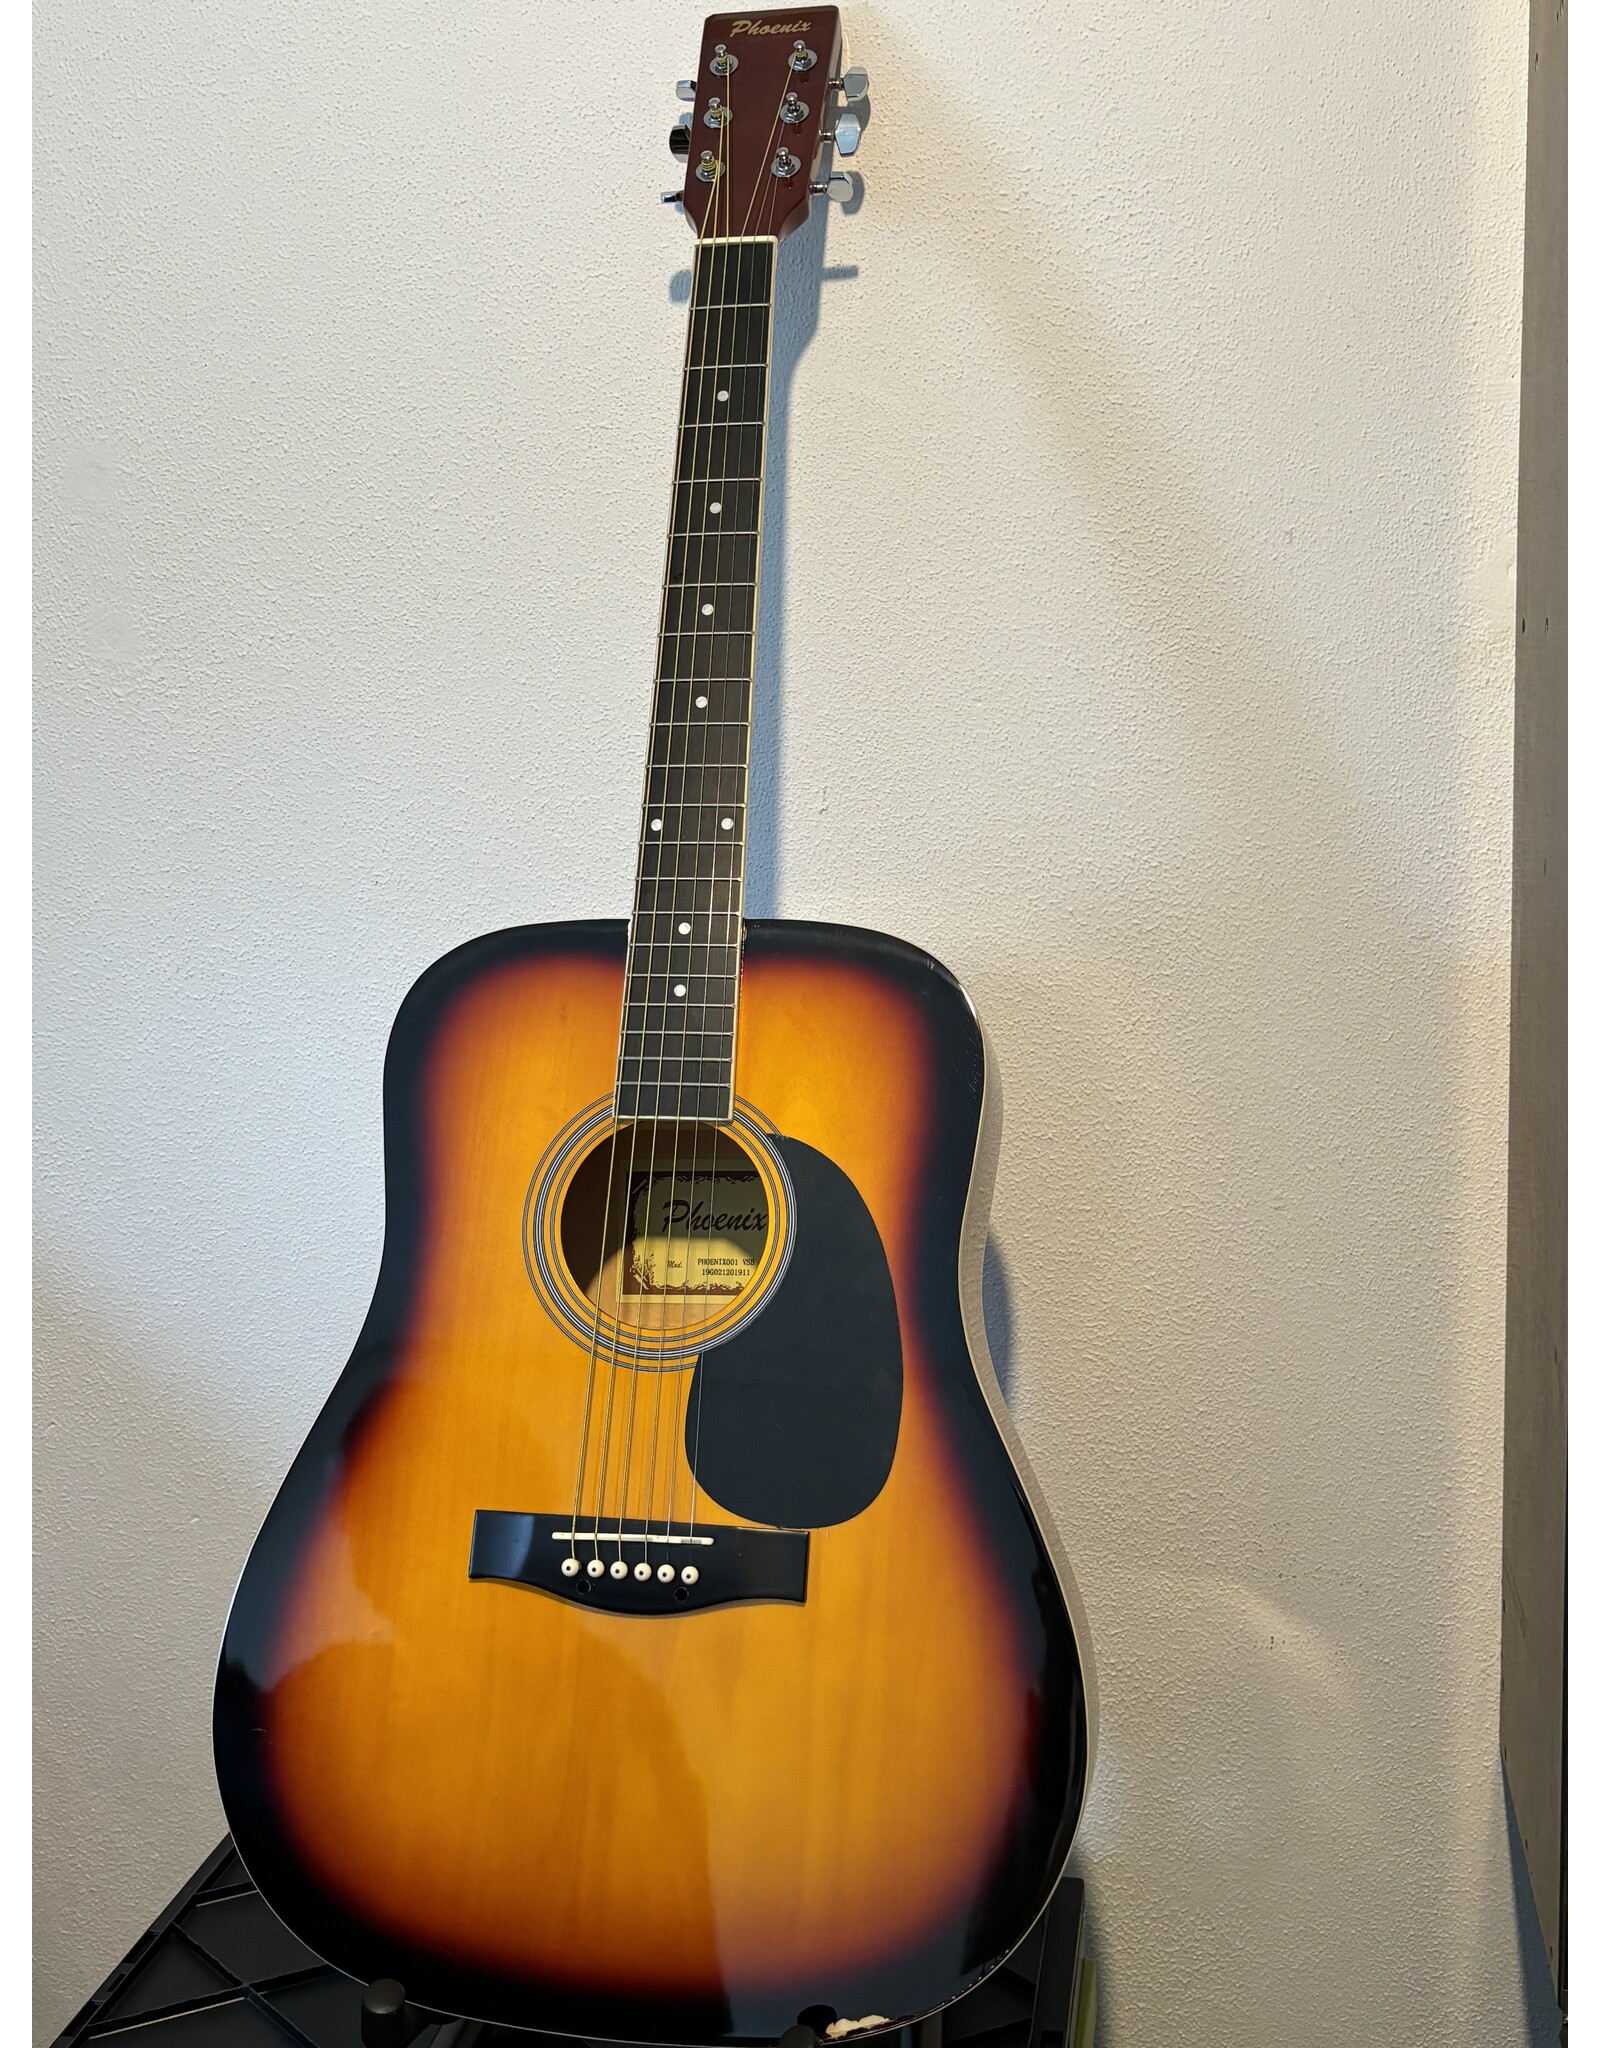 Phoenix Phoenix Western Guitar 001 Vintage Sunburst